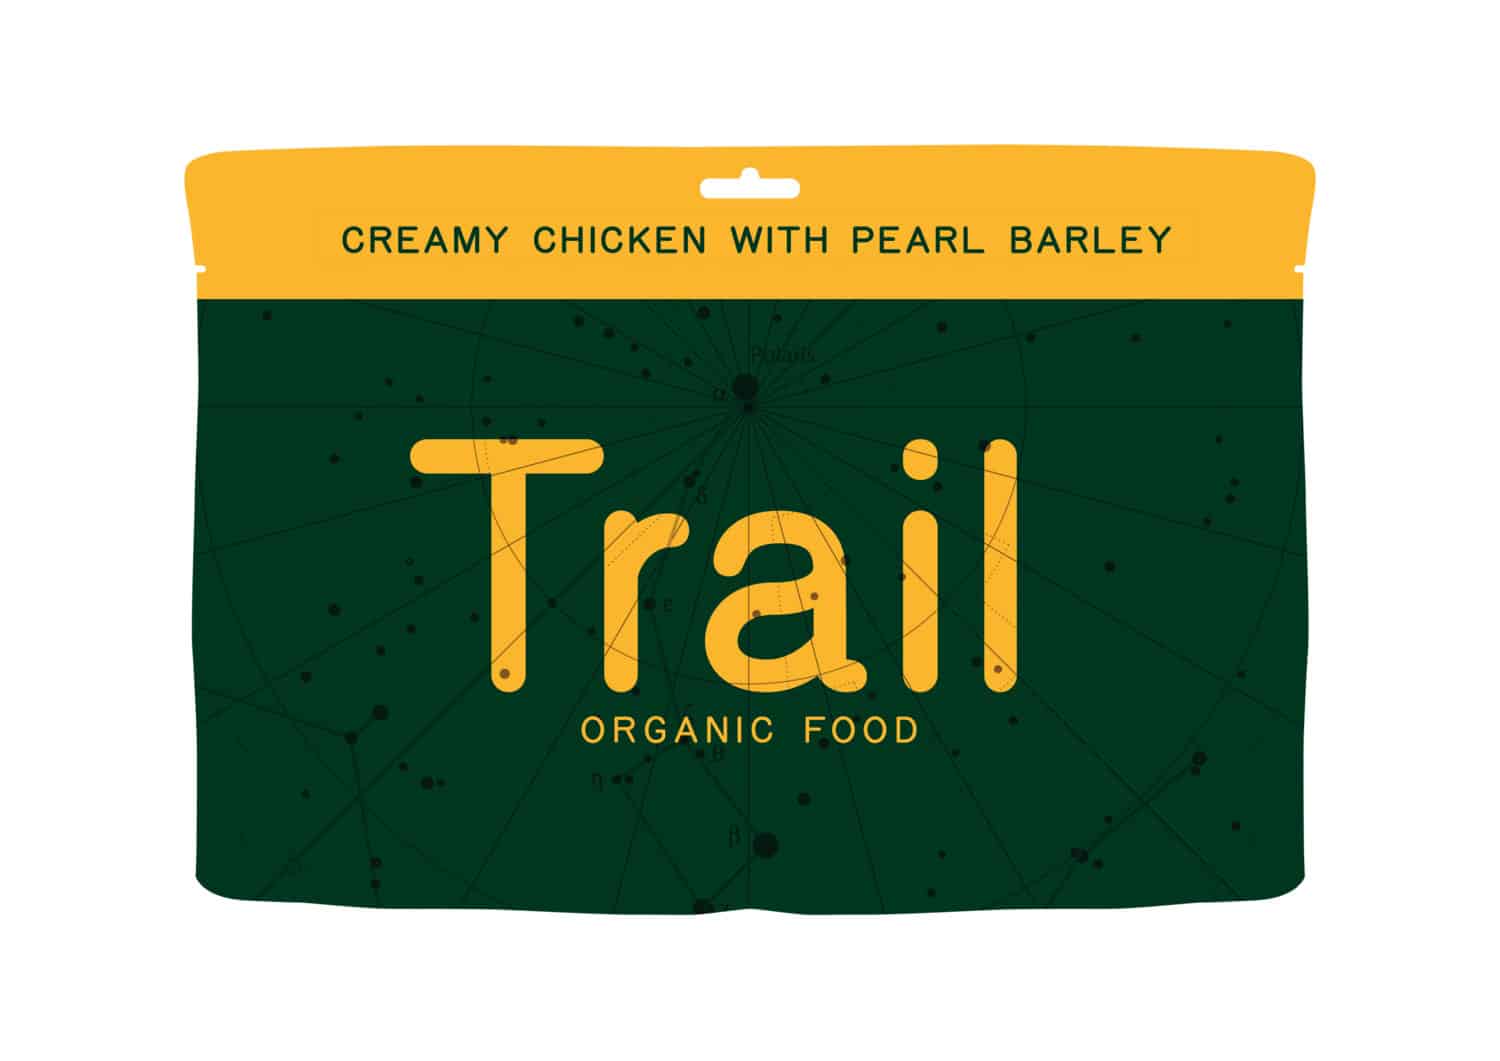 Trail Organic Food